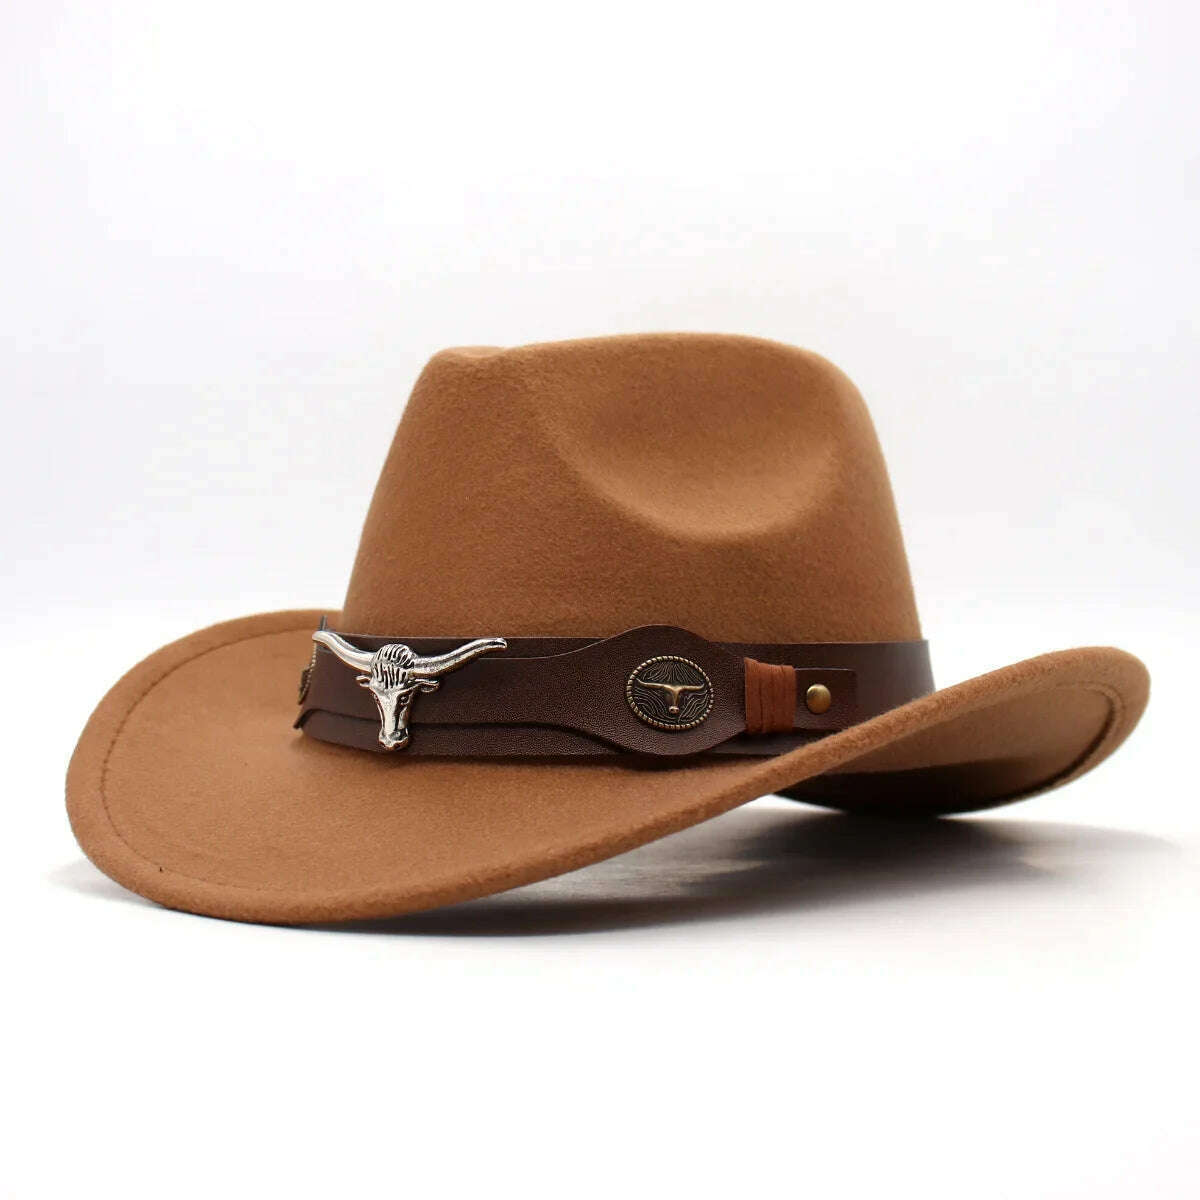 KIMLUD, Western Cowboy Black Hat With Bull Decor Classic Wide Brim Jazz Imitation Wool Hats For Women Felt Hats With Cow Head Knight Hat, Khaki ZongNT / S(52-54cm Child), KIMLUD Women's Clothes